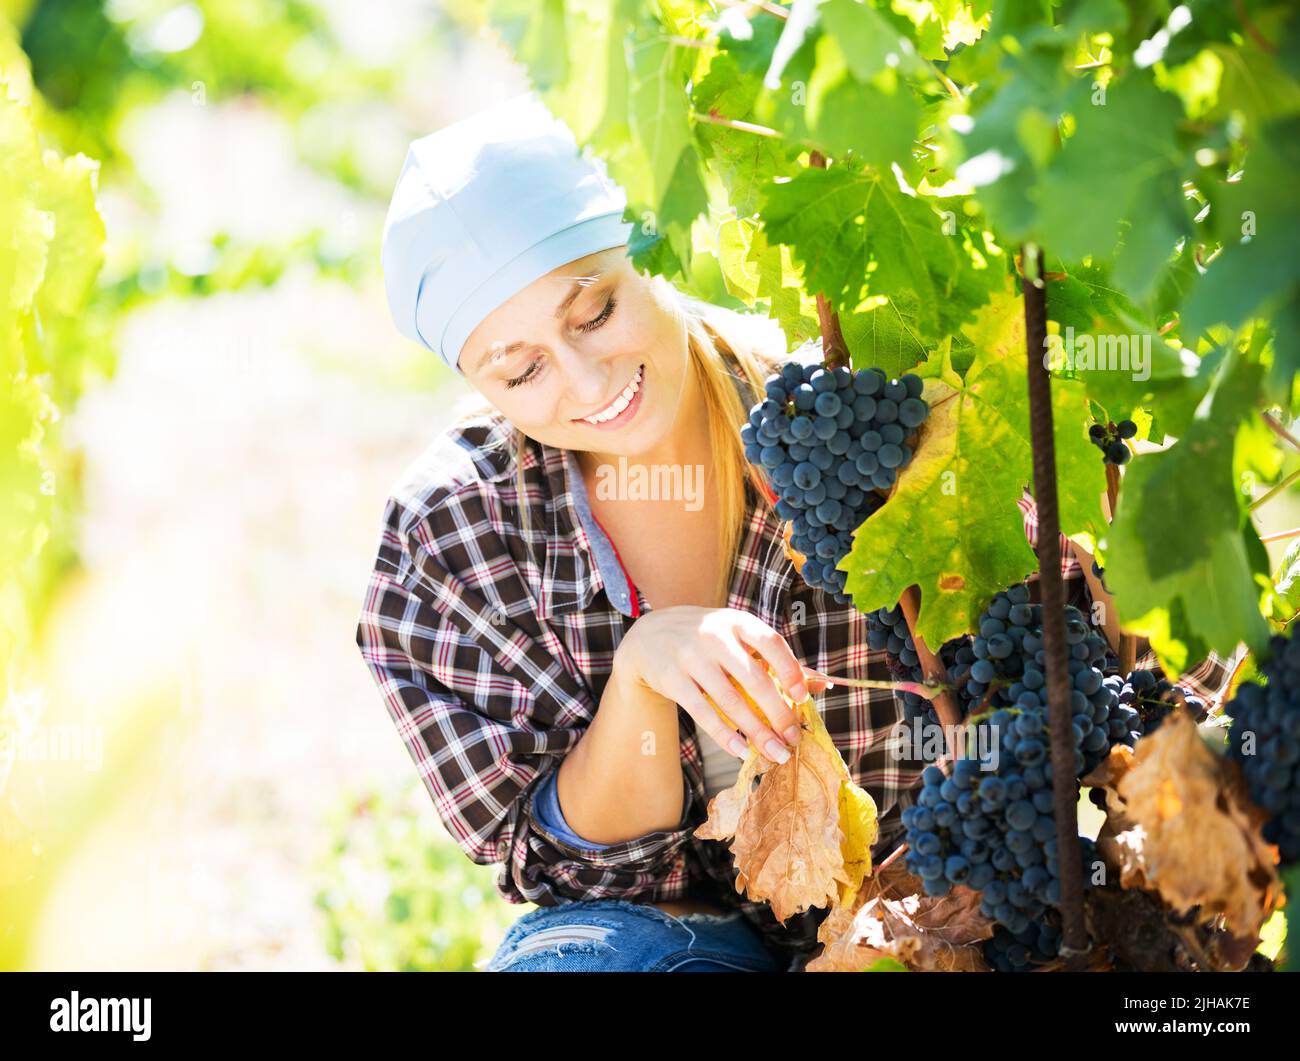 Woman harvesting grape in farm Stock Photo